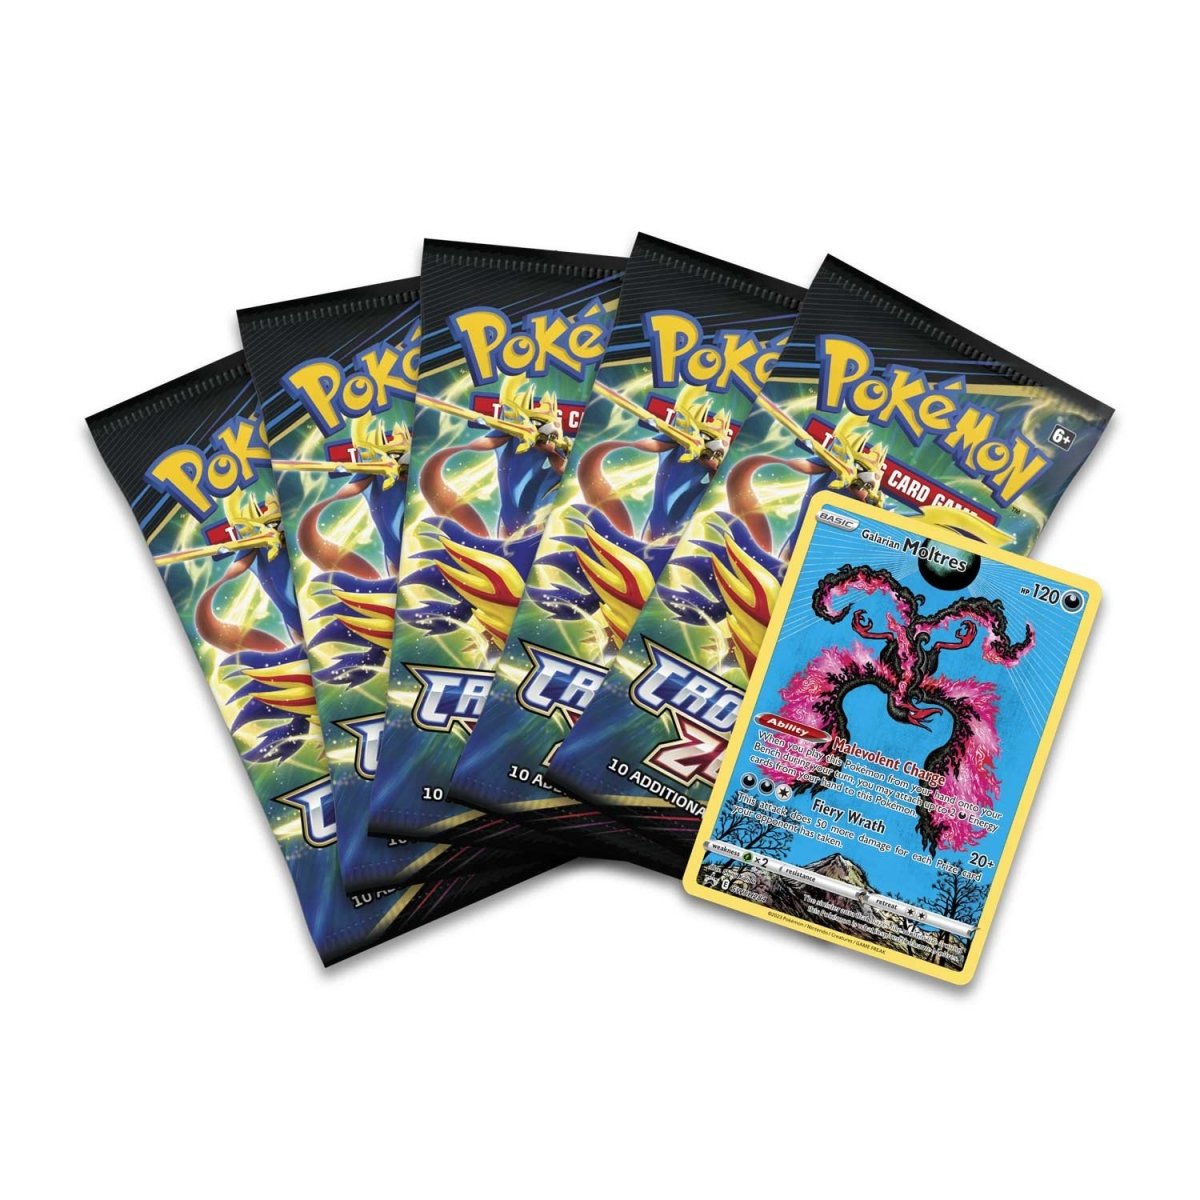 Pokemon Trading Card Game: Crown Zenith Tin - Galarian Moltres